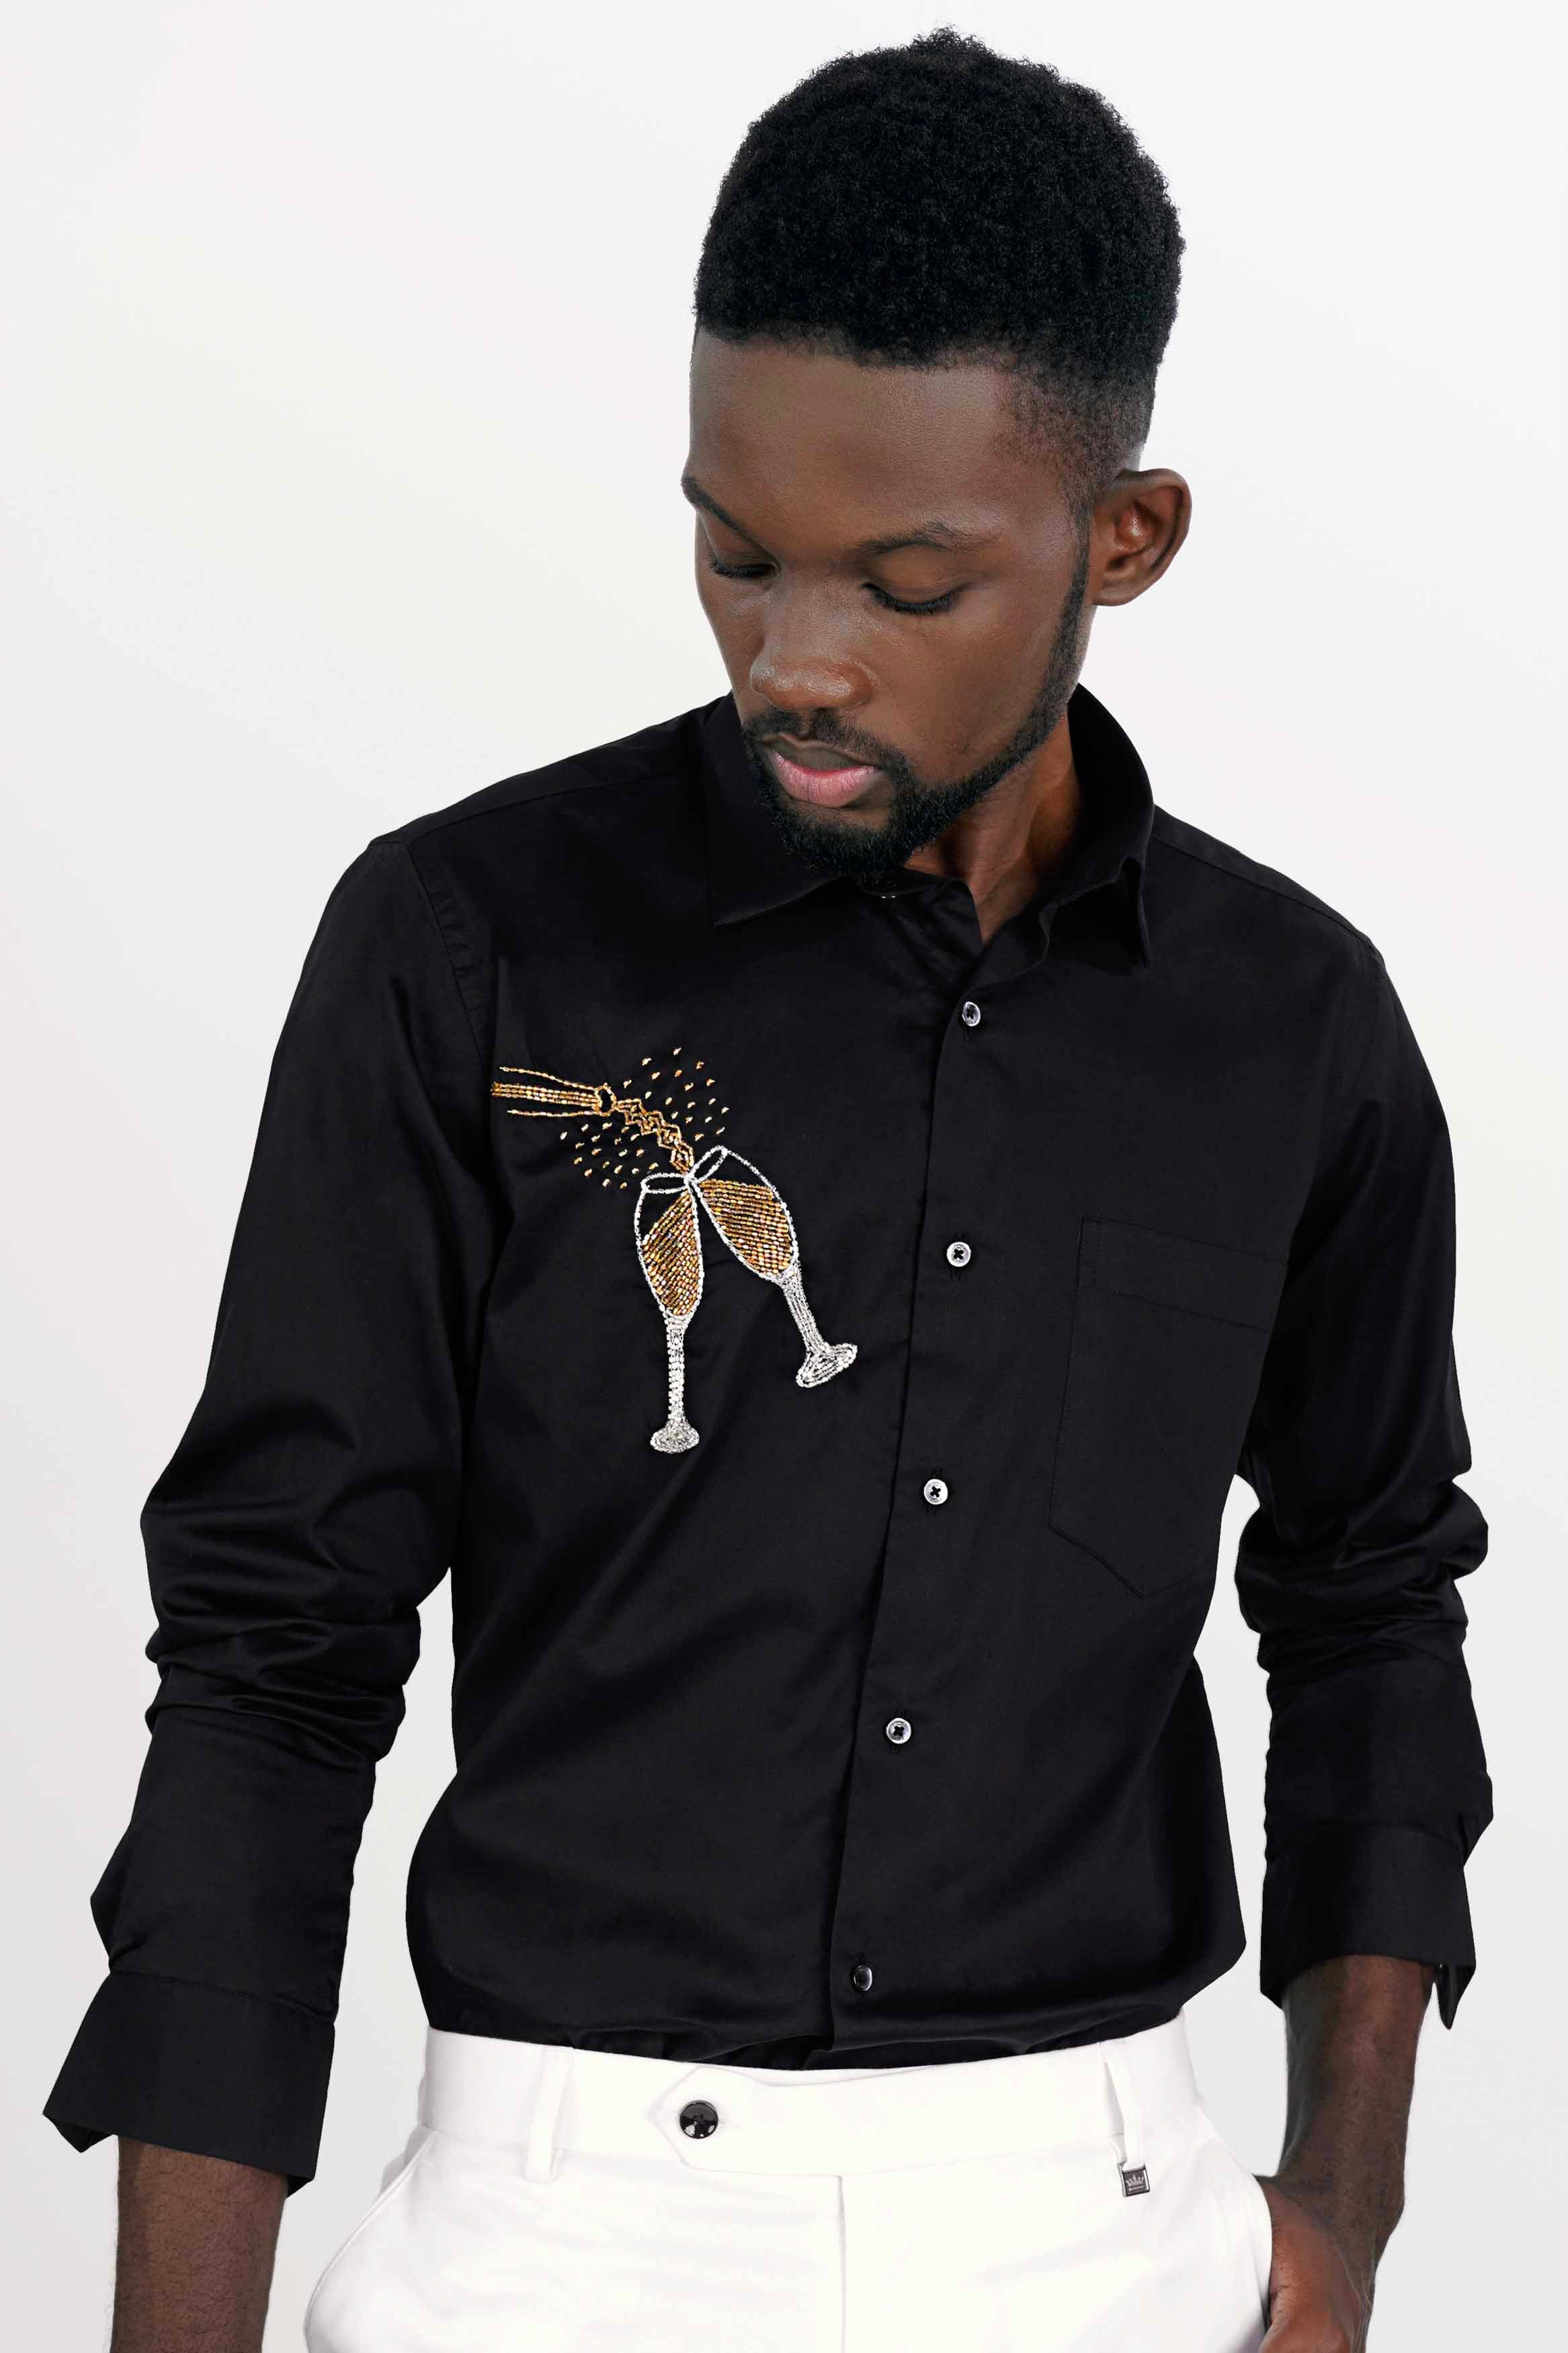 Jade Black champagne flute Embroidered Super Soft Premium Cotton Designer Shirt